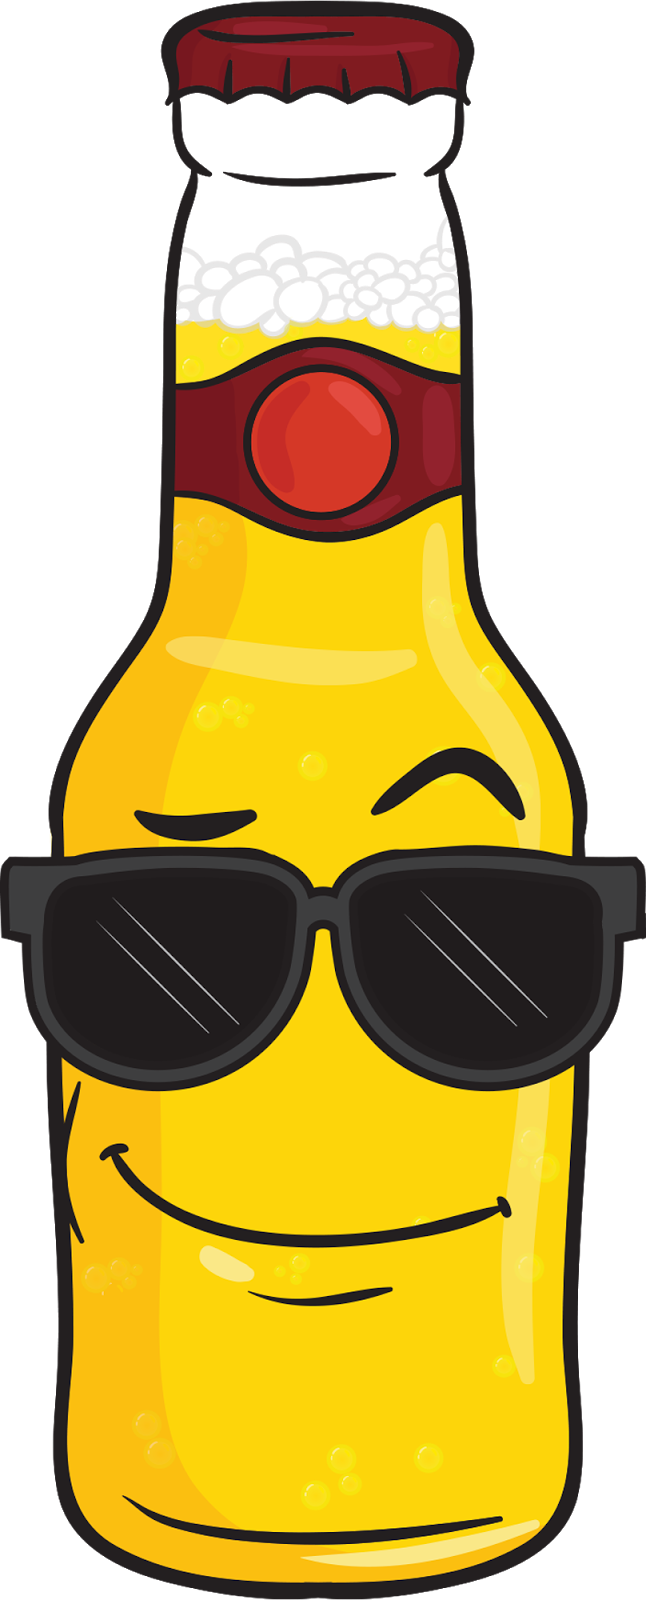 Upcoming Jacksonville Craft Beer Events - Beer Bottle Emoji (646x1600)